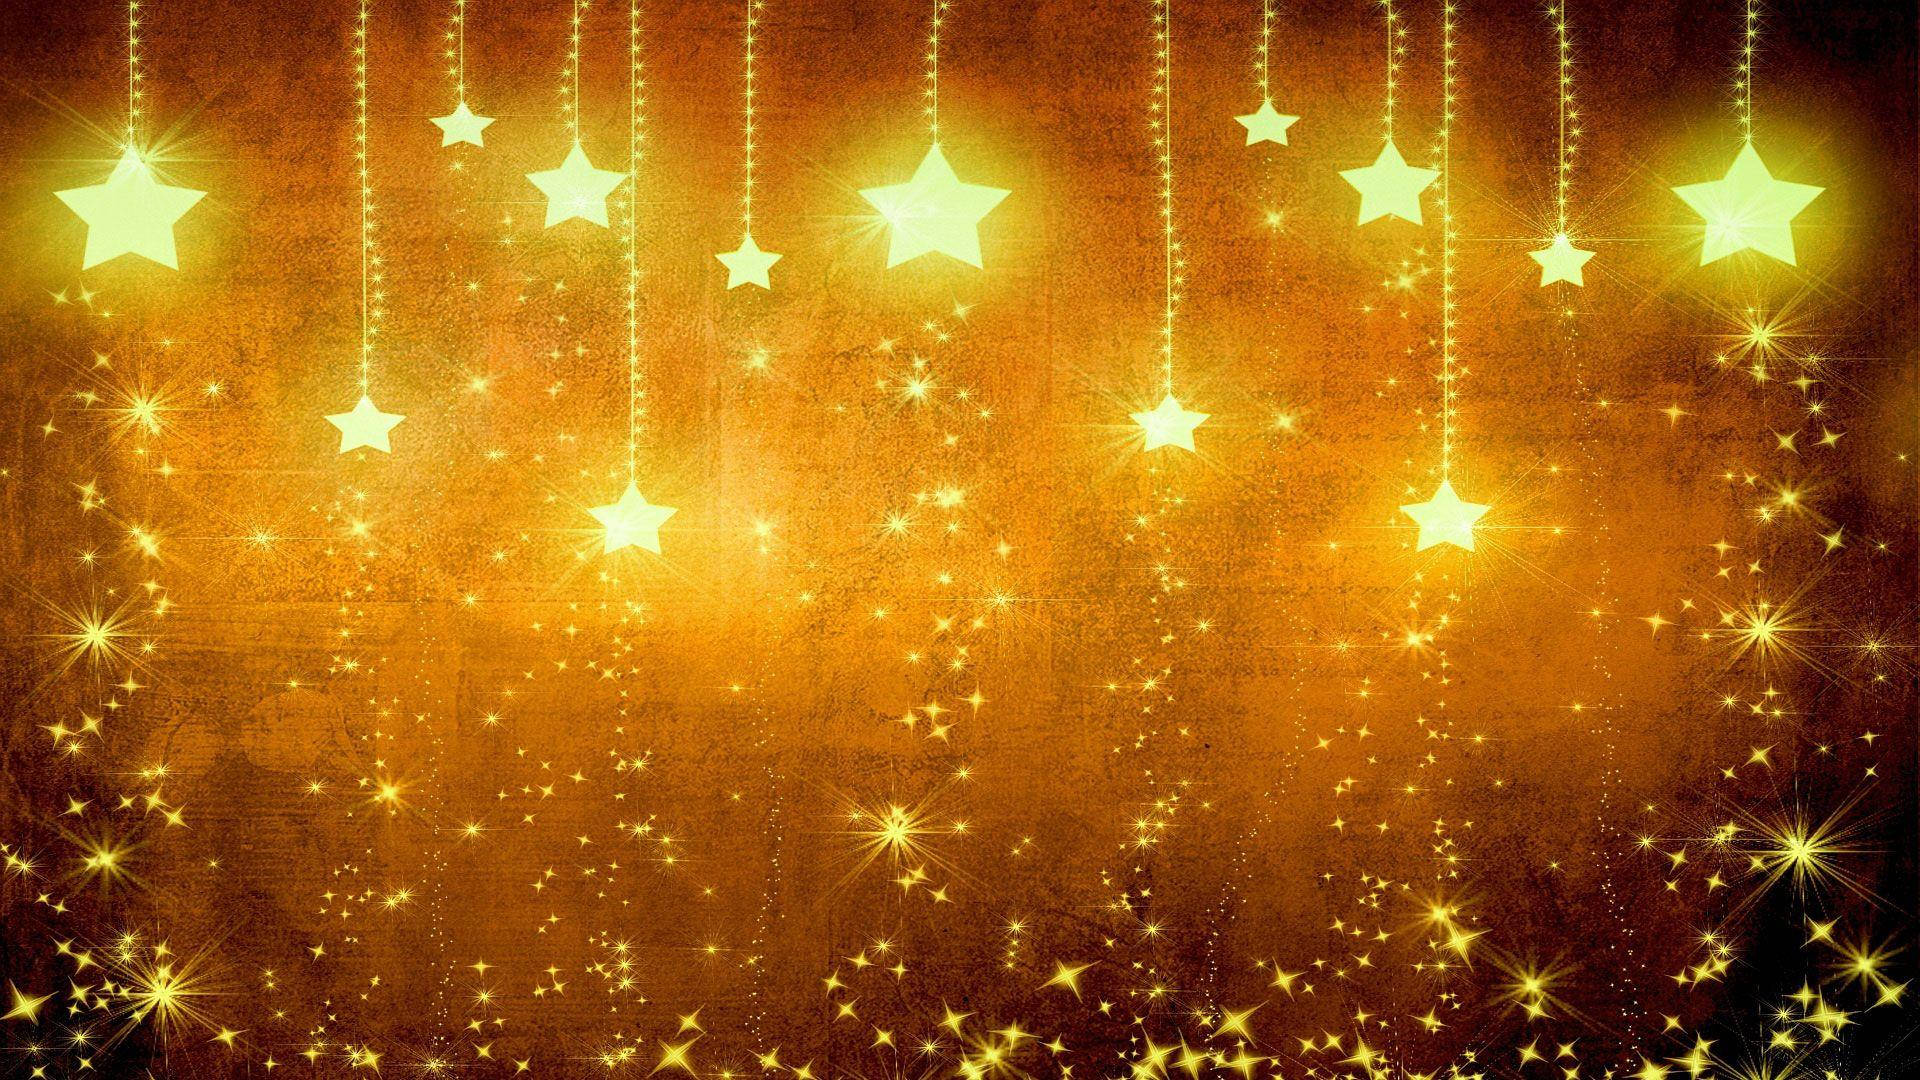 Sparkly Gold Rain Of Stars Wallpaper